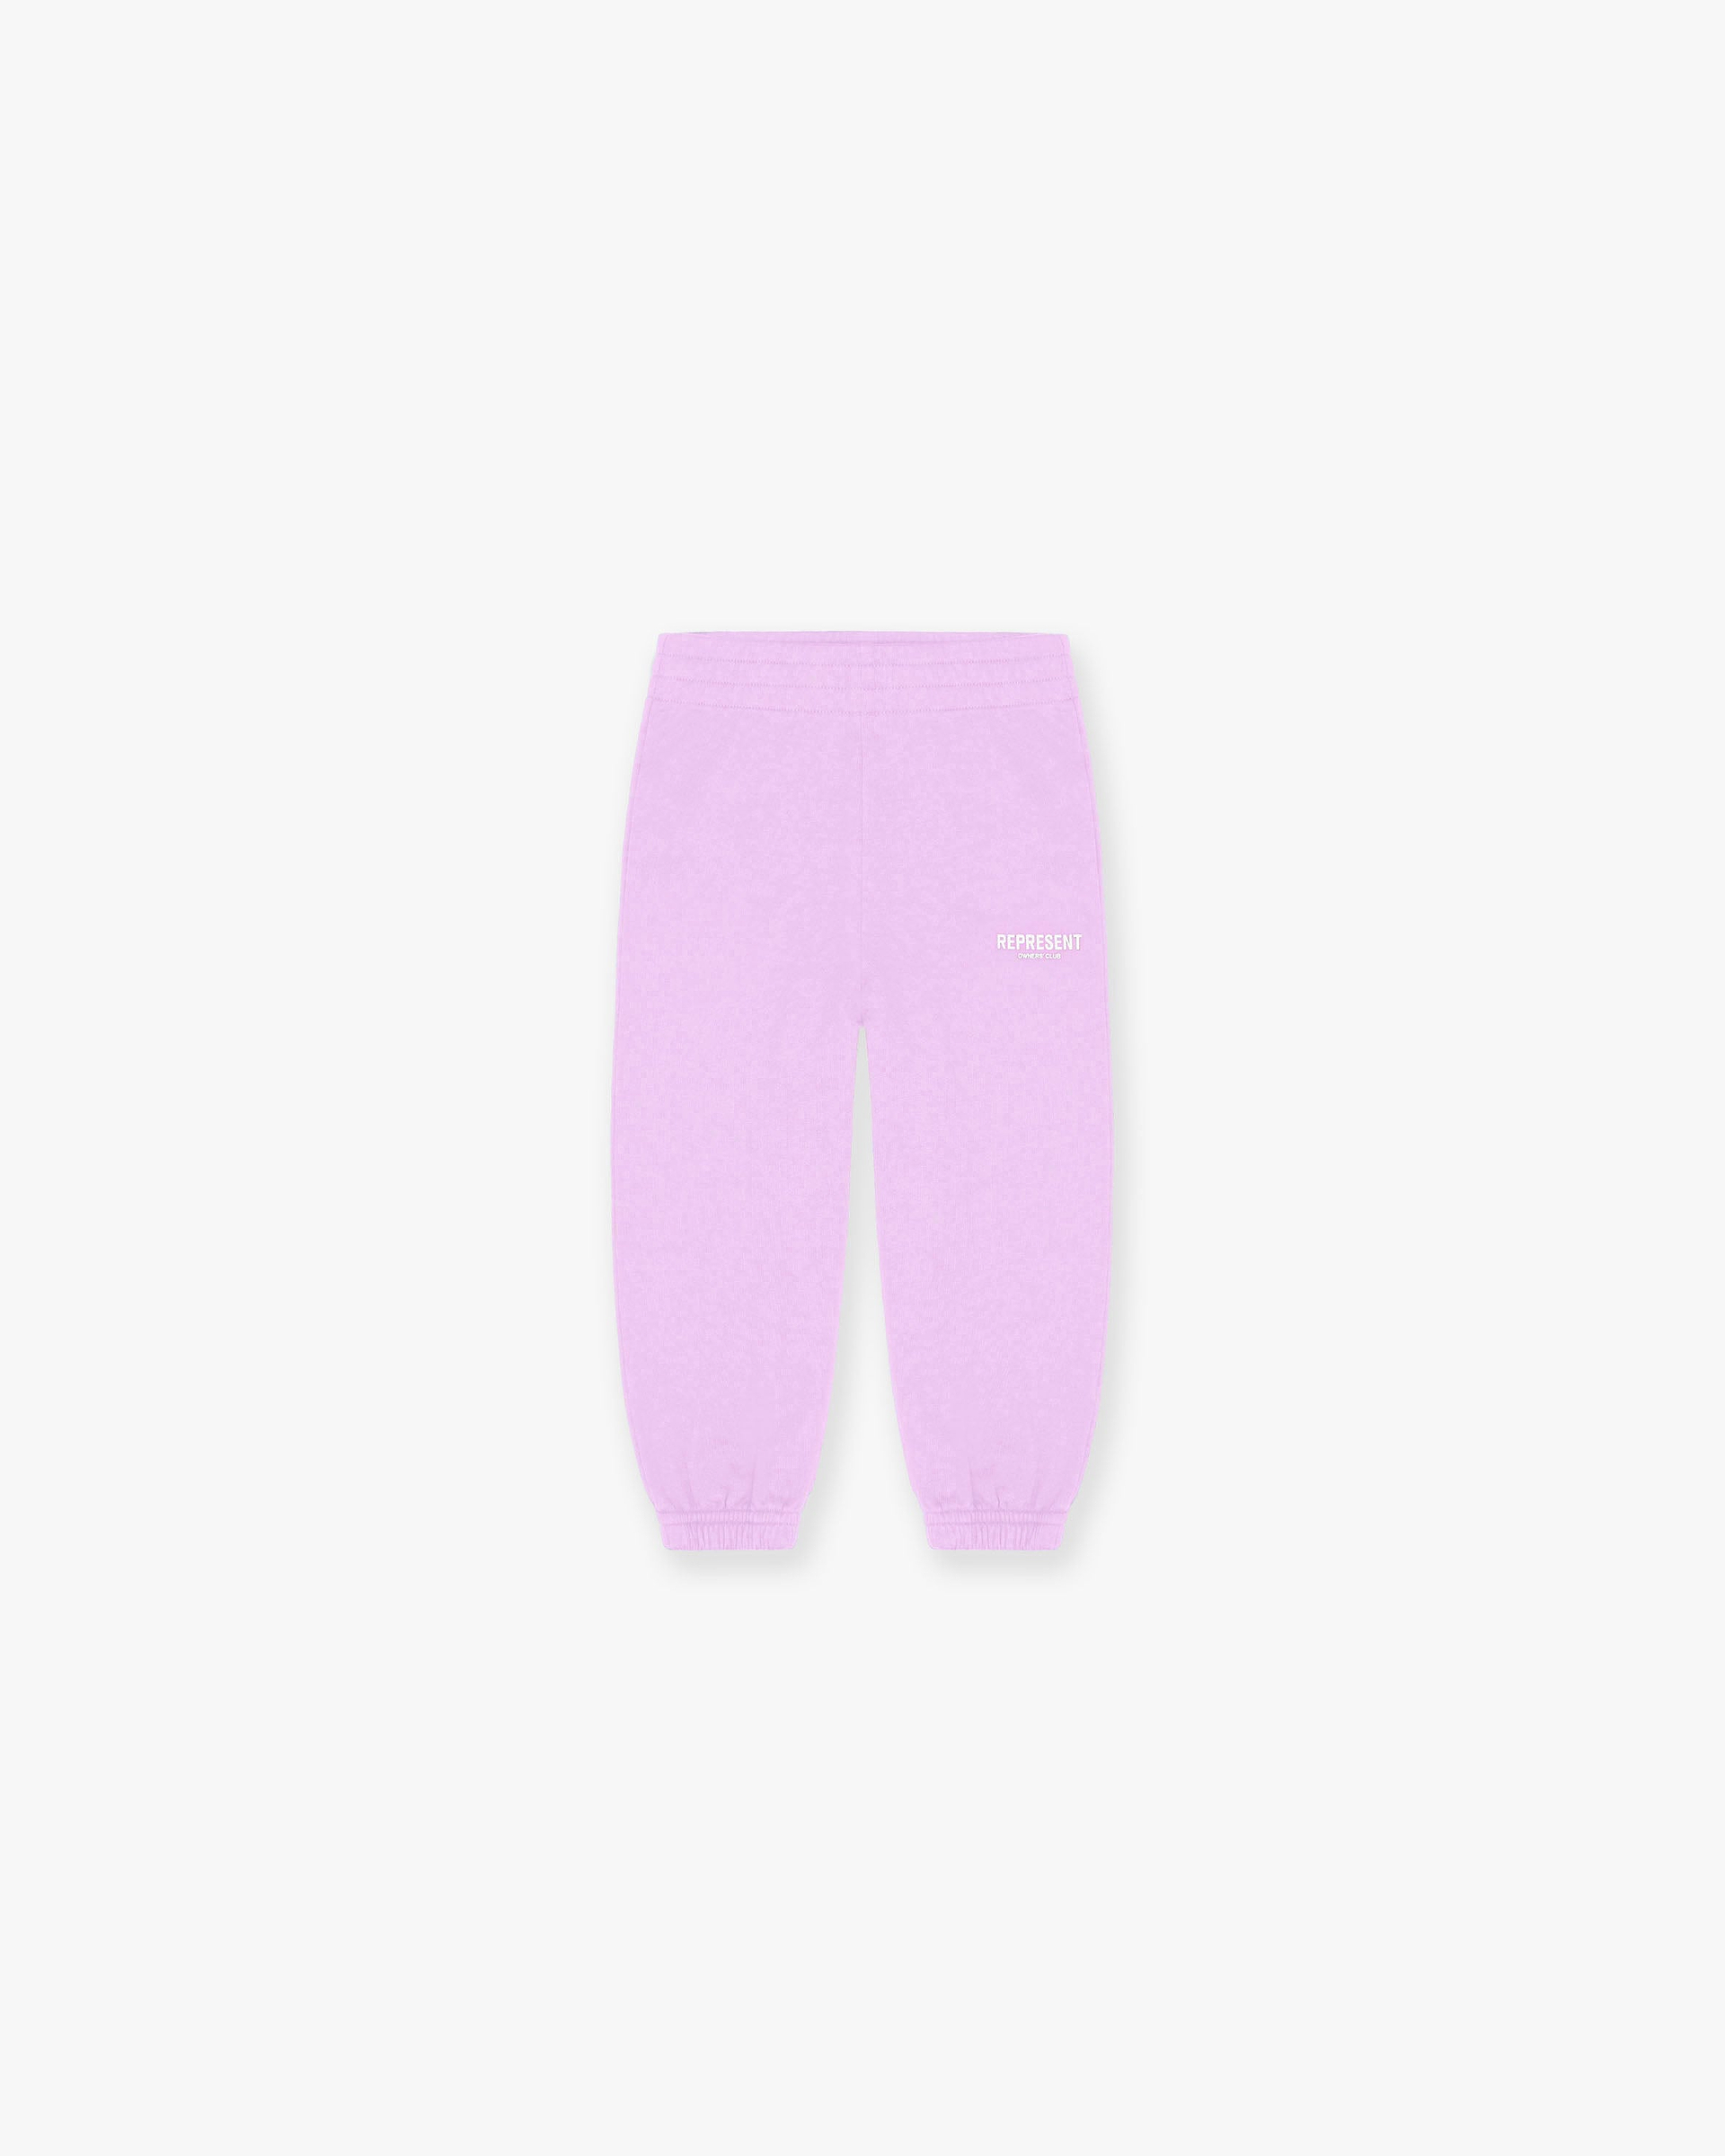 Buy Pink, Lilac & Grey Leggings 3 Pack 2-3 years, Trousers